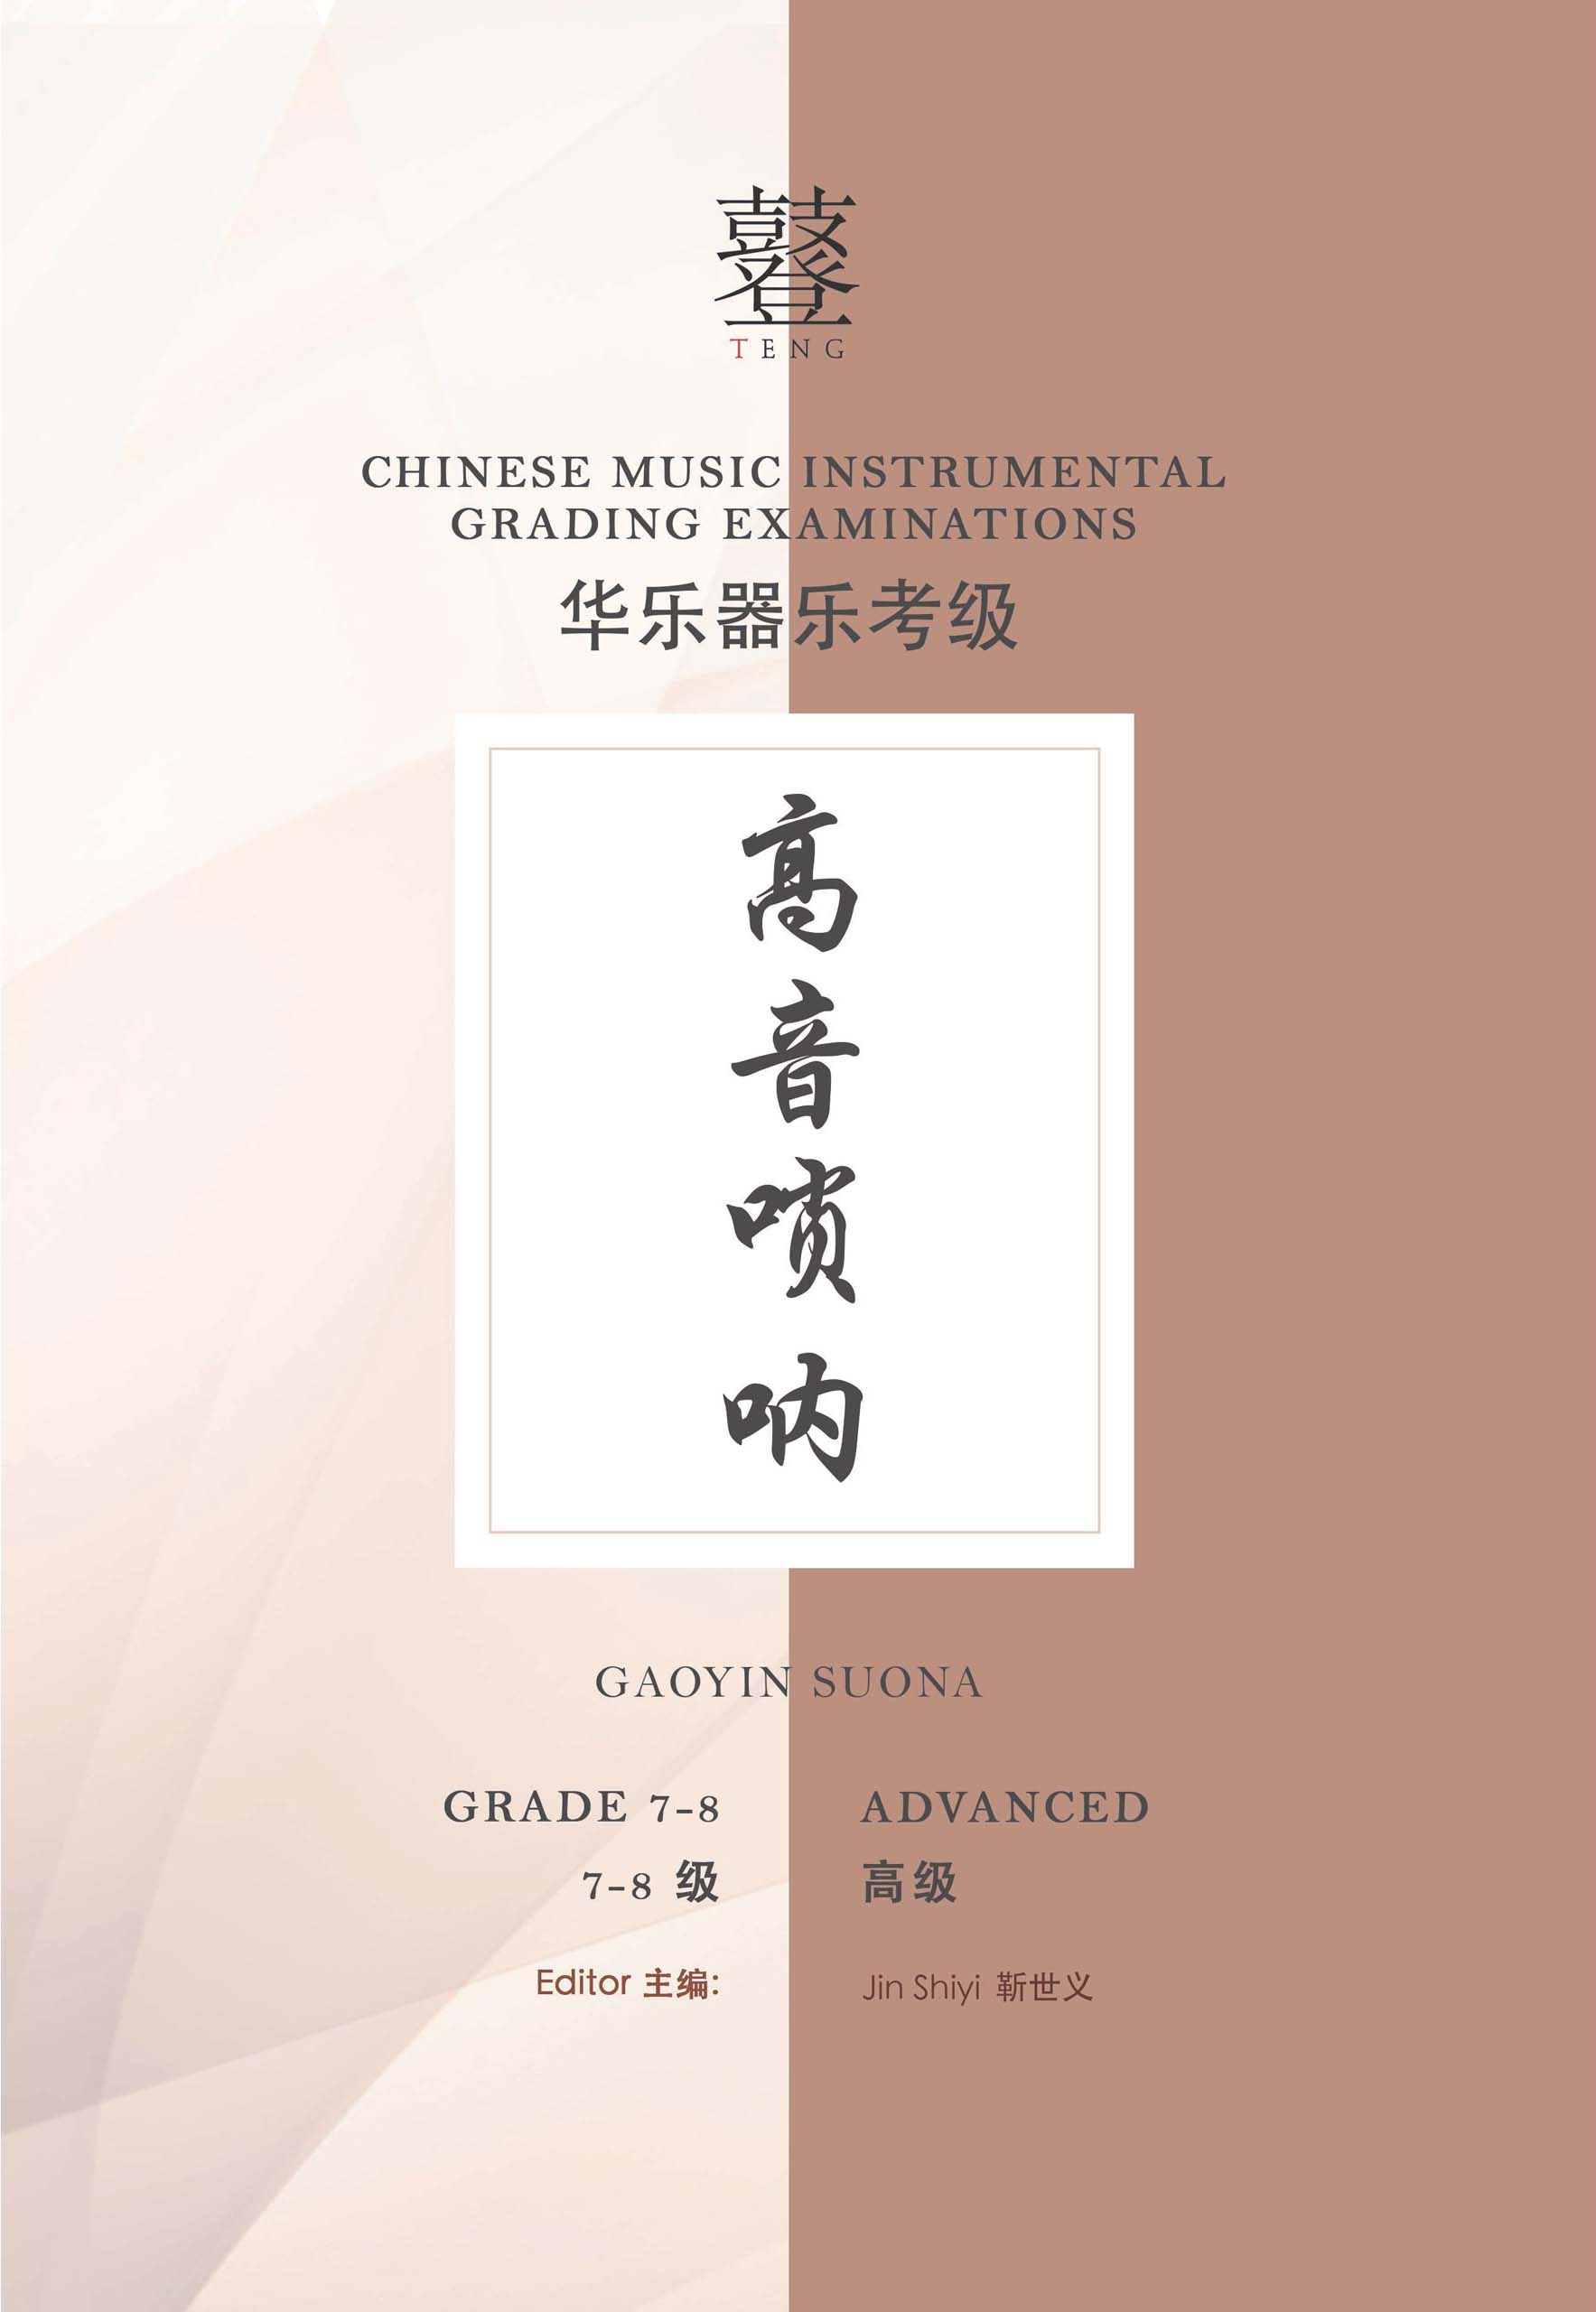 Gaoyin Suona Grading Examination Book by Teng (Intermediate Grade 7-8) featured photo